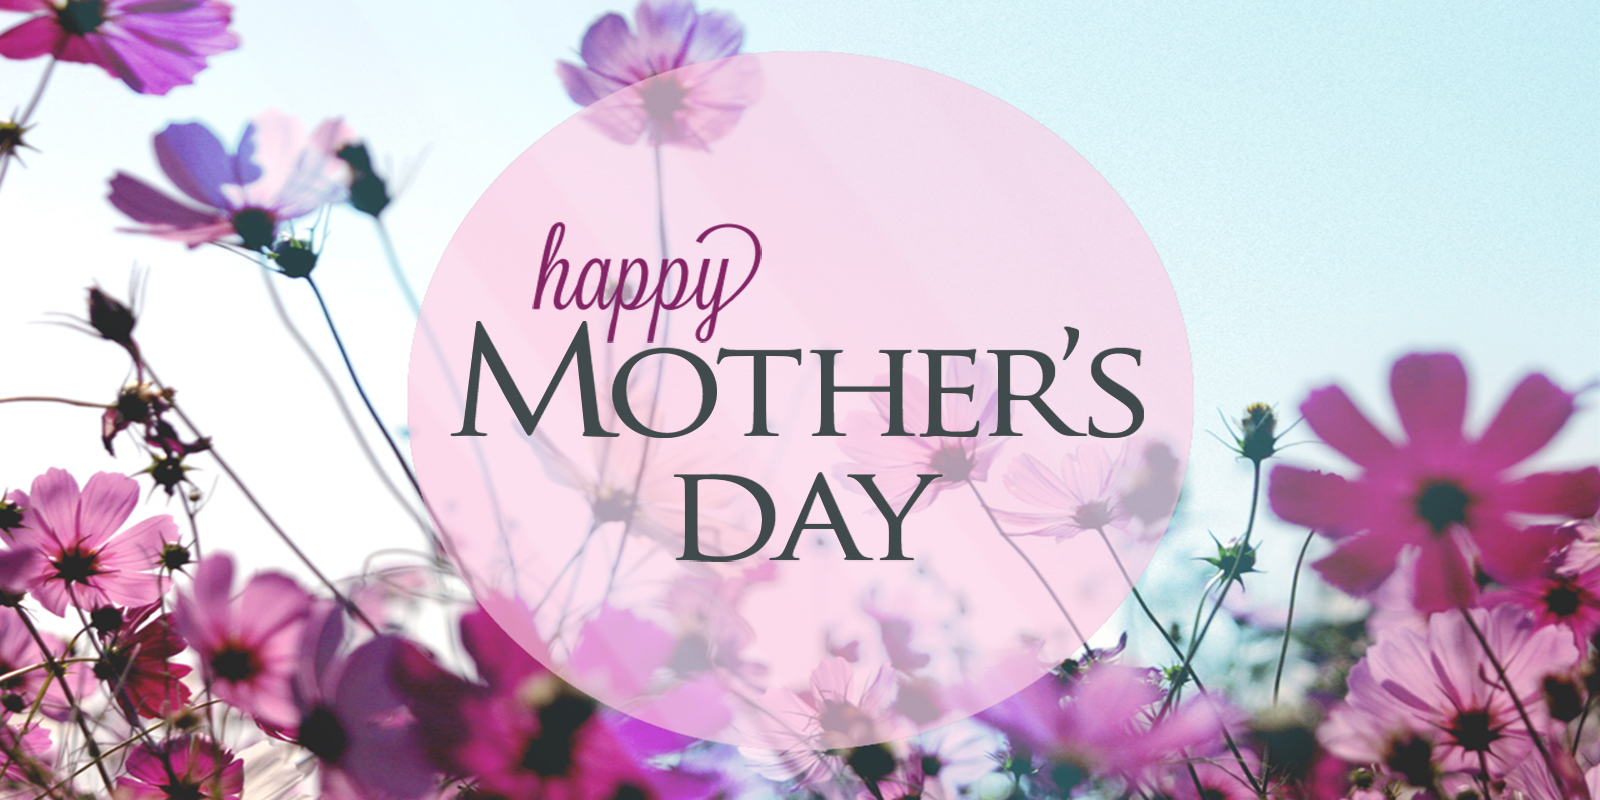 Mothers Day Images Free Download | PixelsTalk.Net